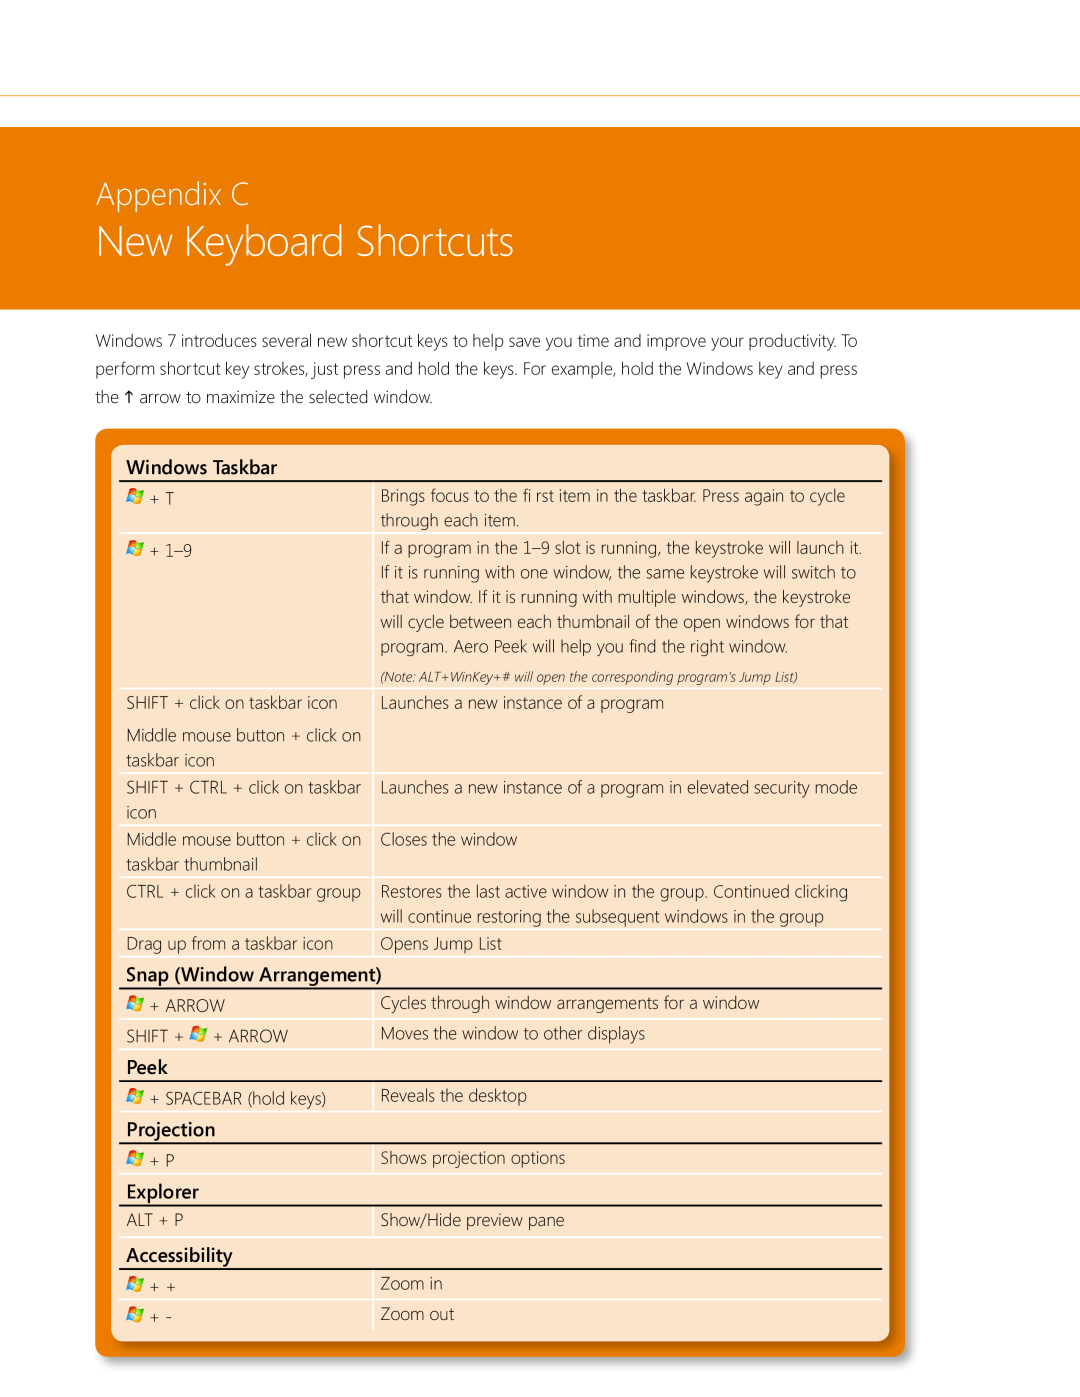 Microsoft QGF-00154 manual New Keyboard Shortcuts, Appendix C, Windows Taskbar, Snap Window Arrangement, Peek, Projection 